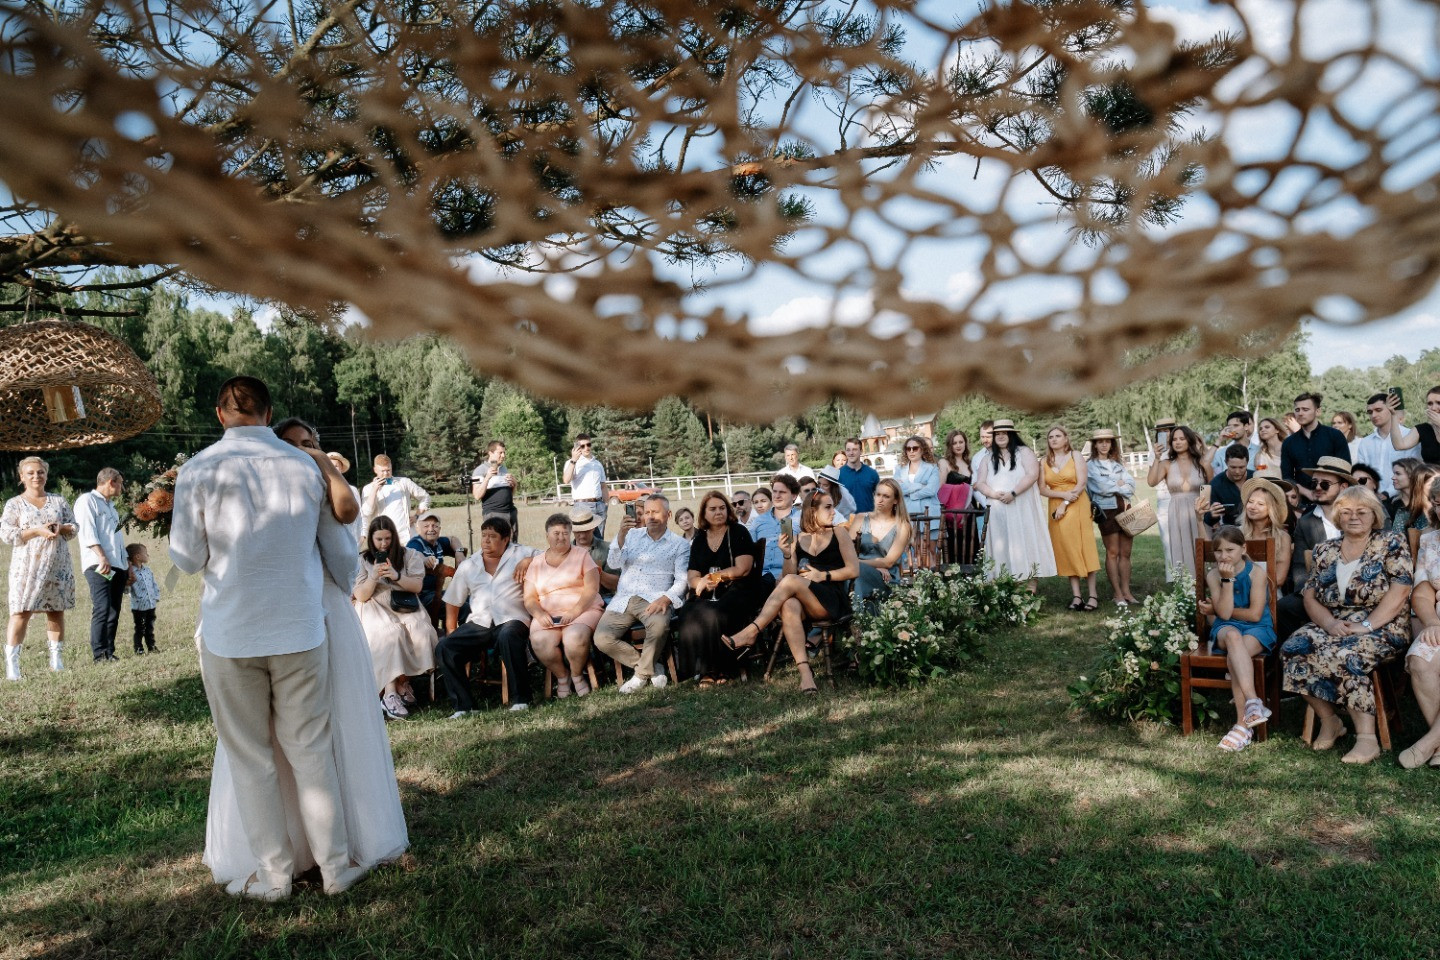 One big family: душевная бохо-свадьба на природе